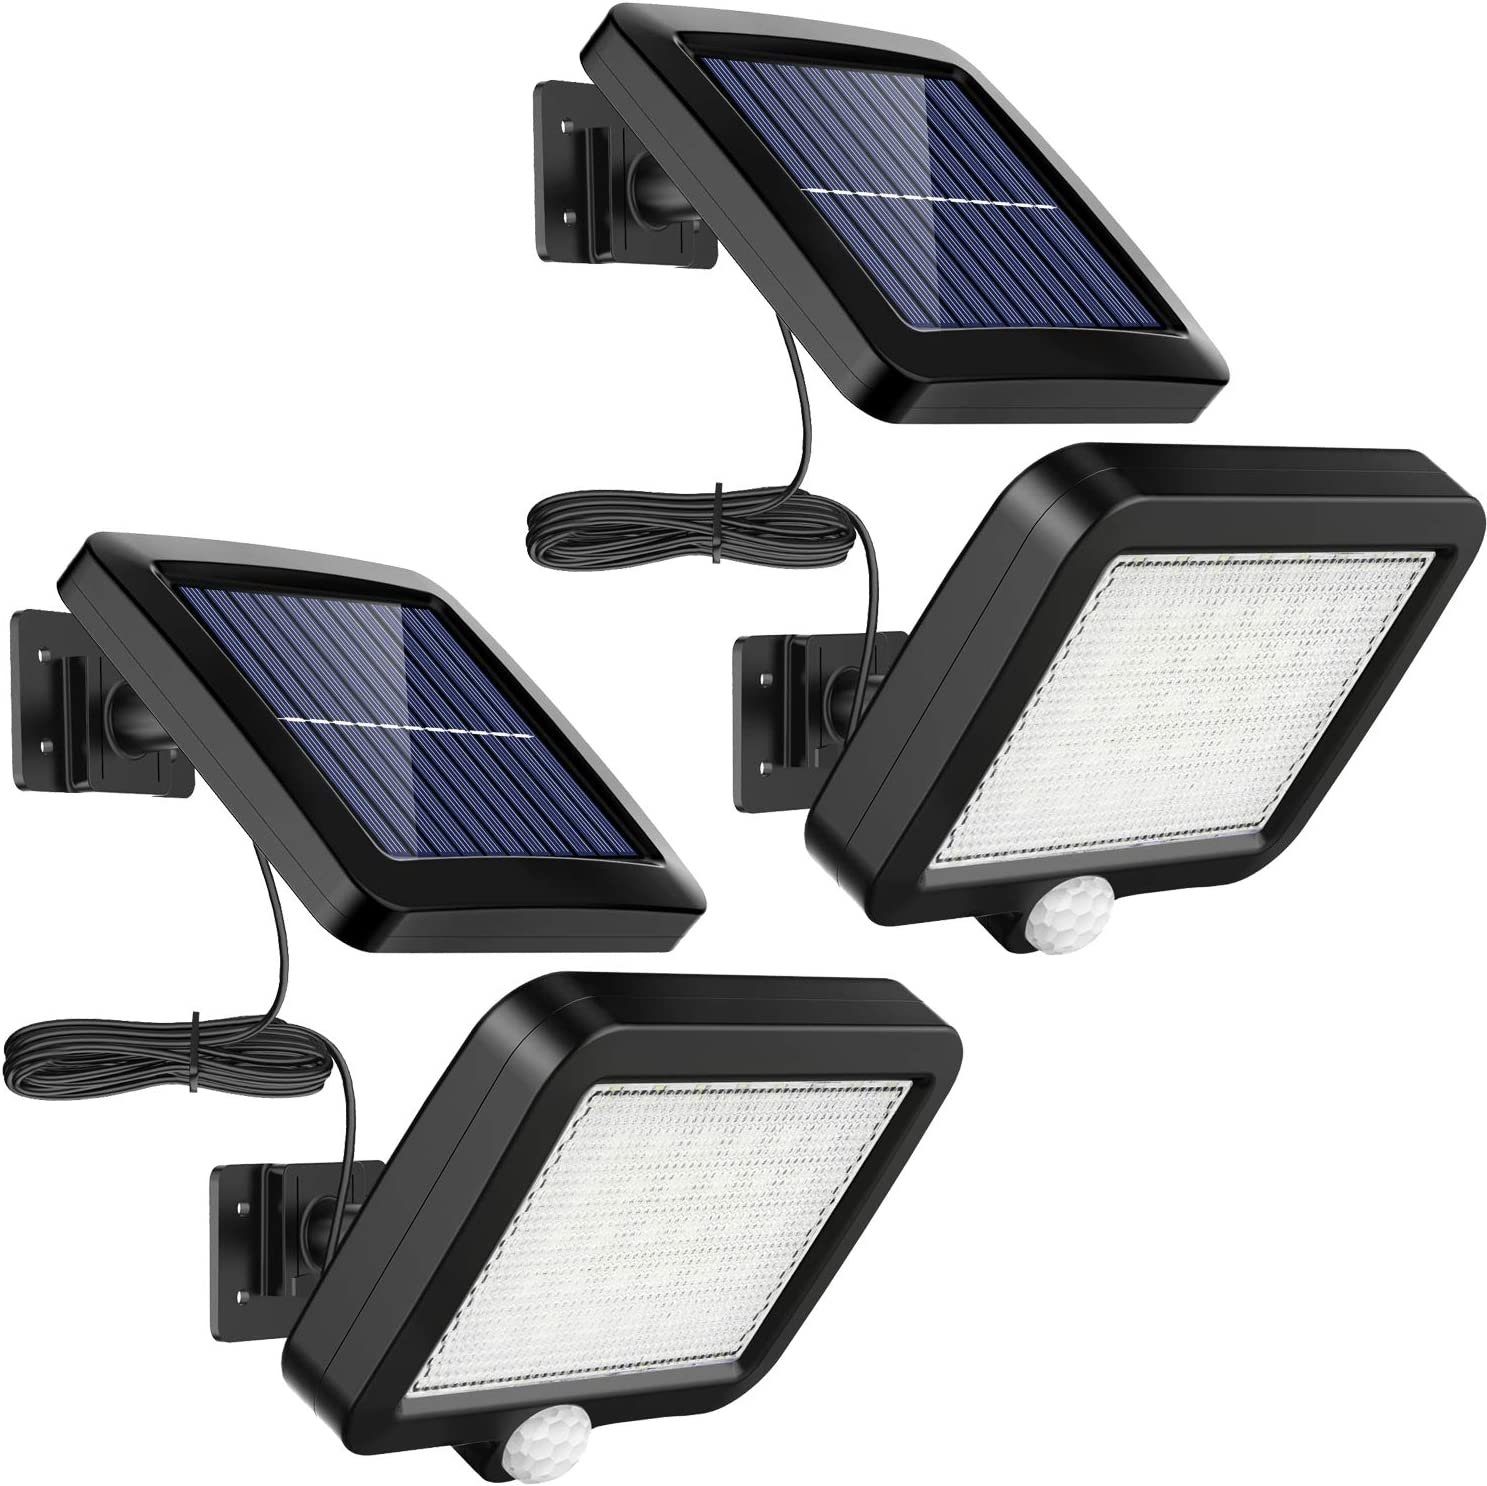 Mmgoqqt Gartenstrahler Solarlampen,2 Stück LED Solar Bewegungsmelder Aussen  Solarleuchten